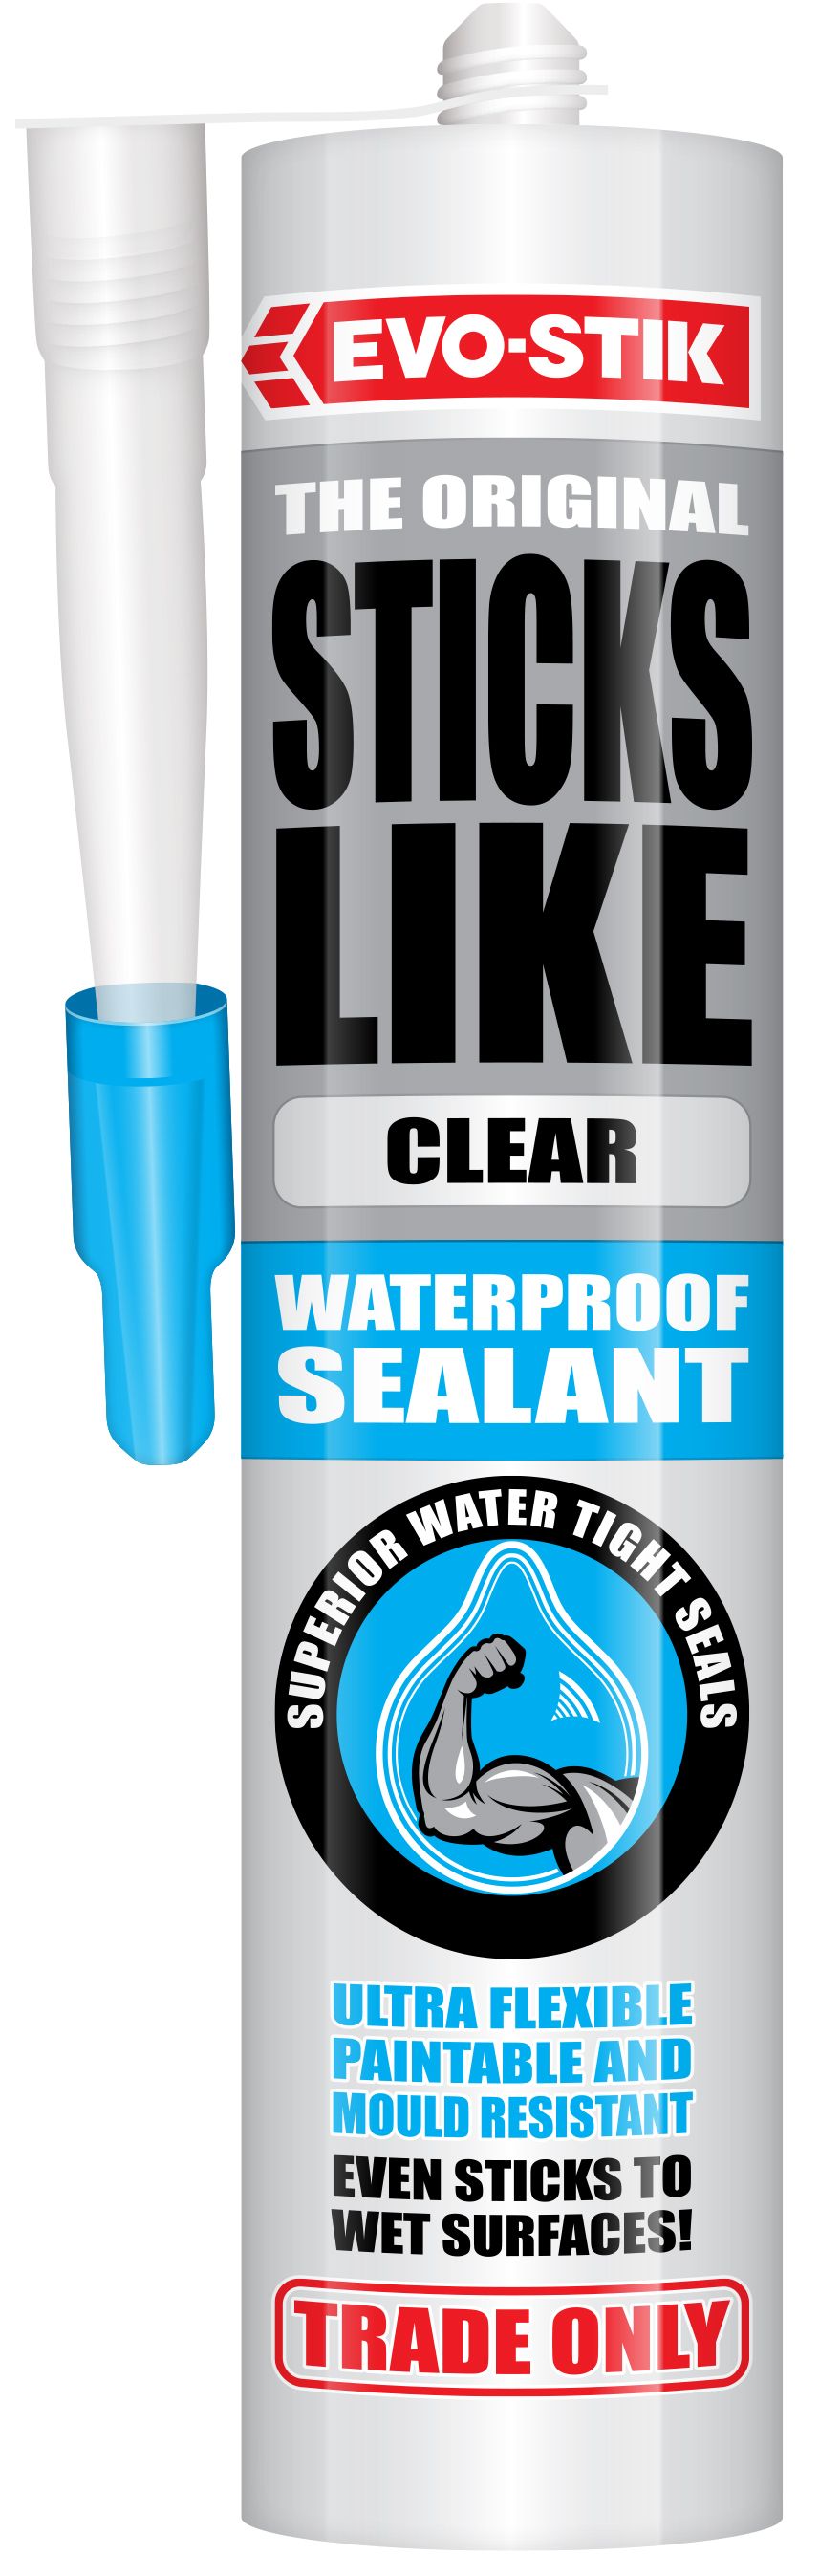 Evo-Stik Sticks Like Waterproof Clear Sealant - 290ml